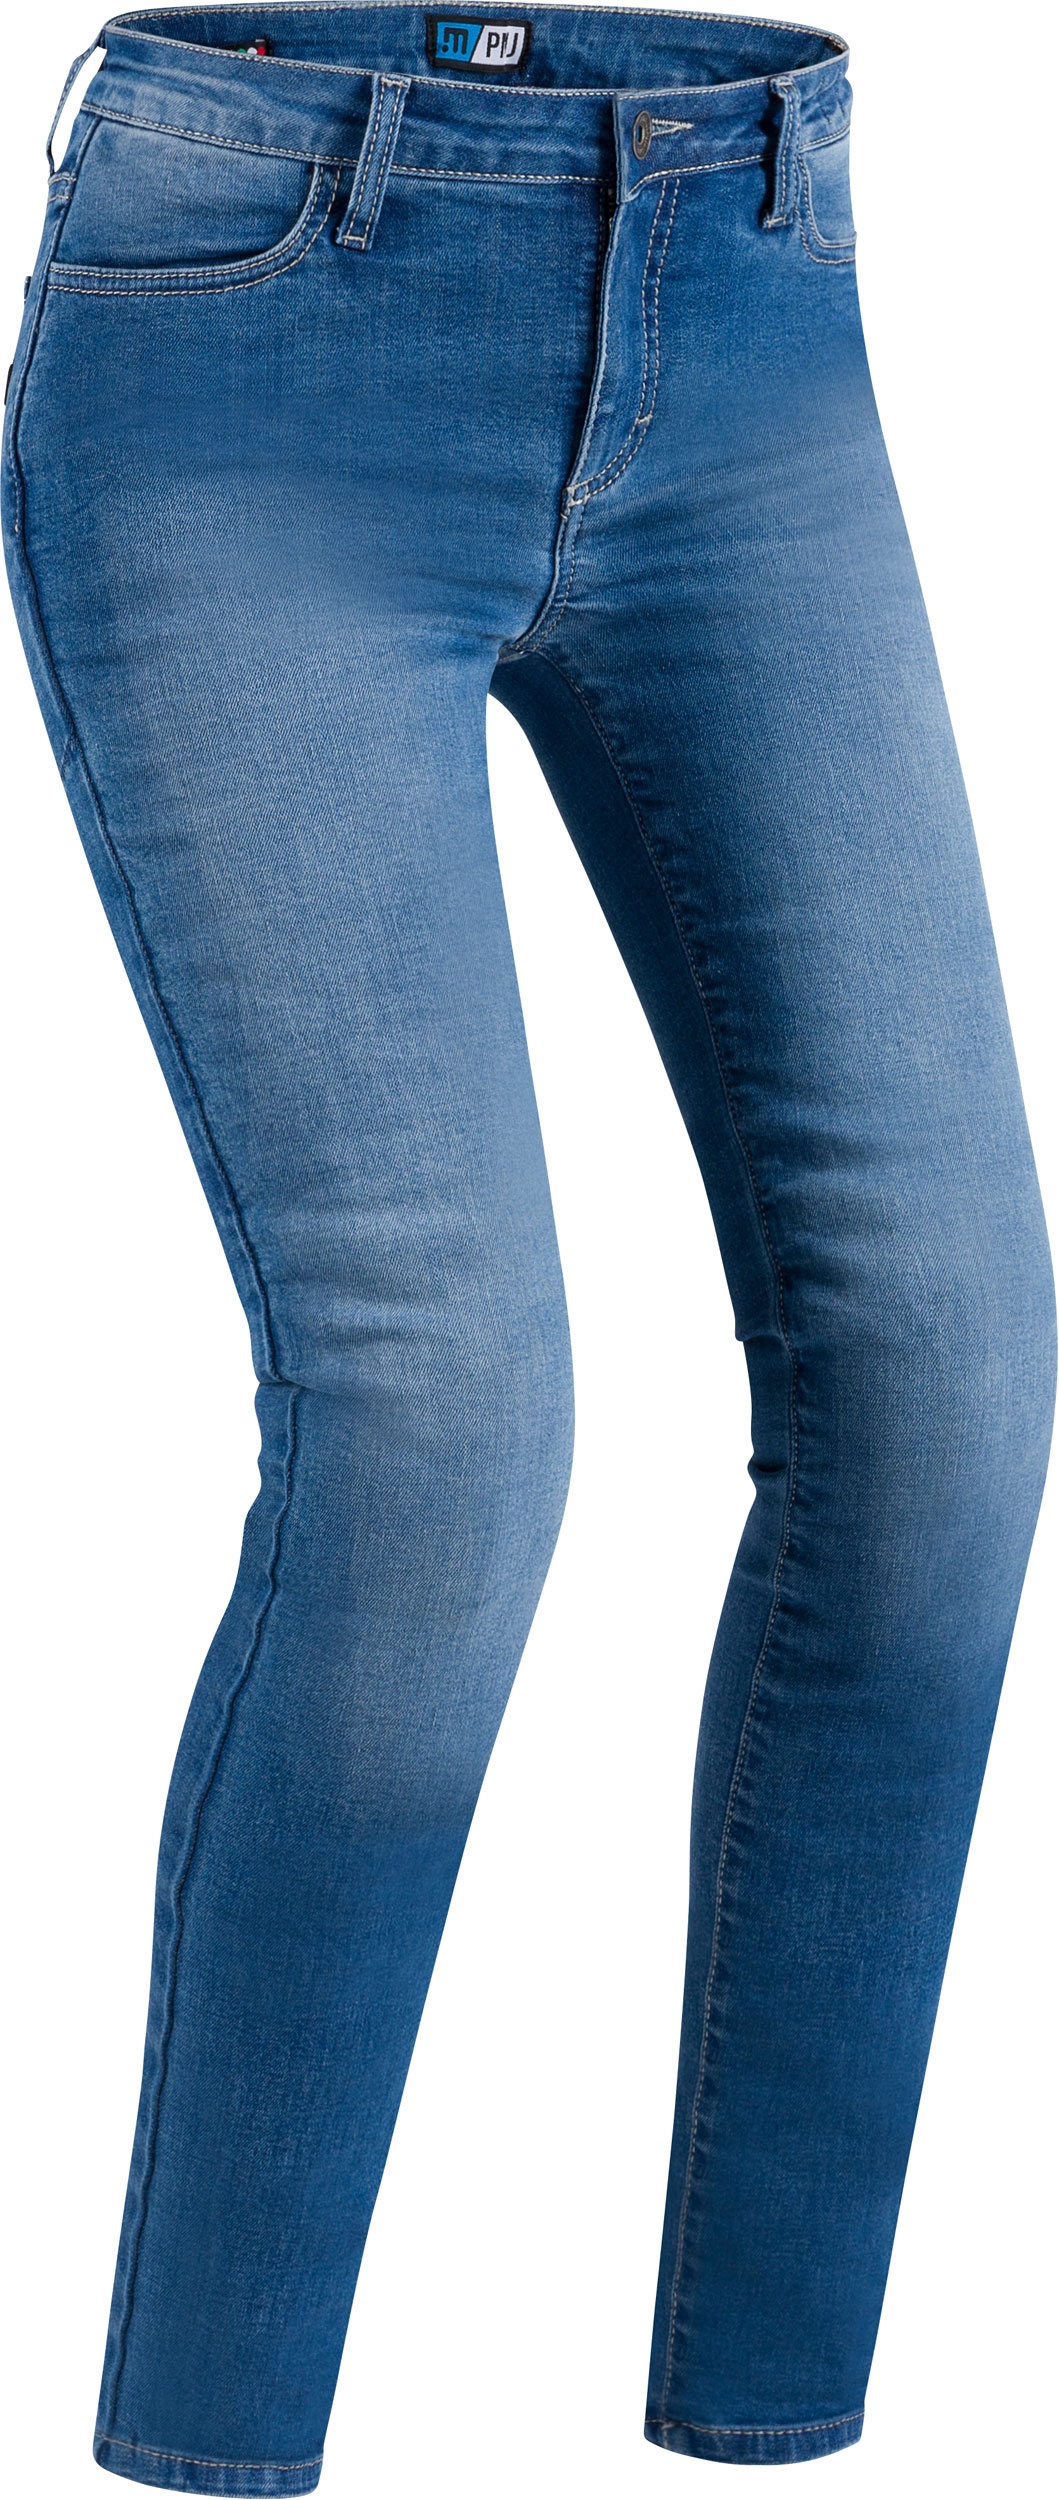 PMJ Skinny, femmes jeans - Bleu - 32